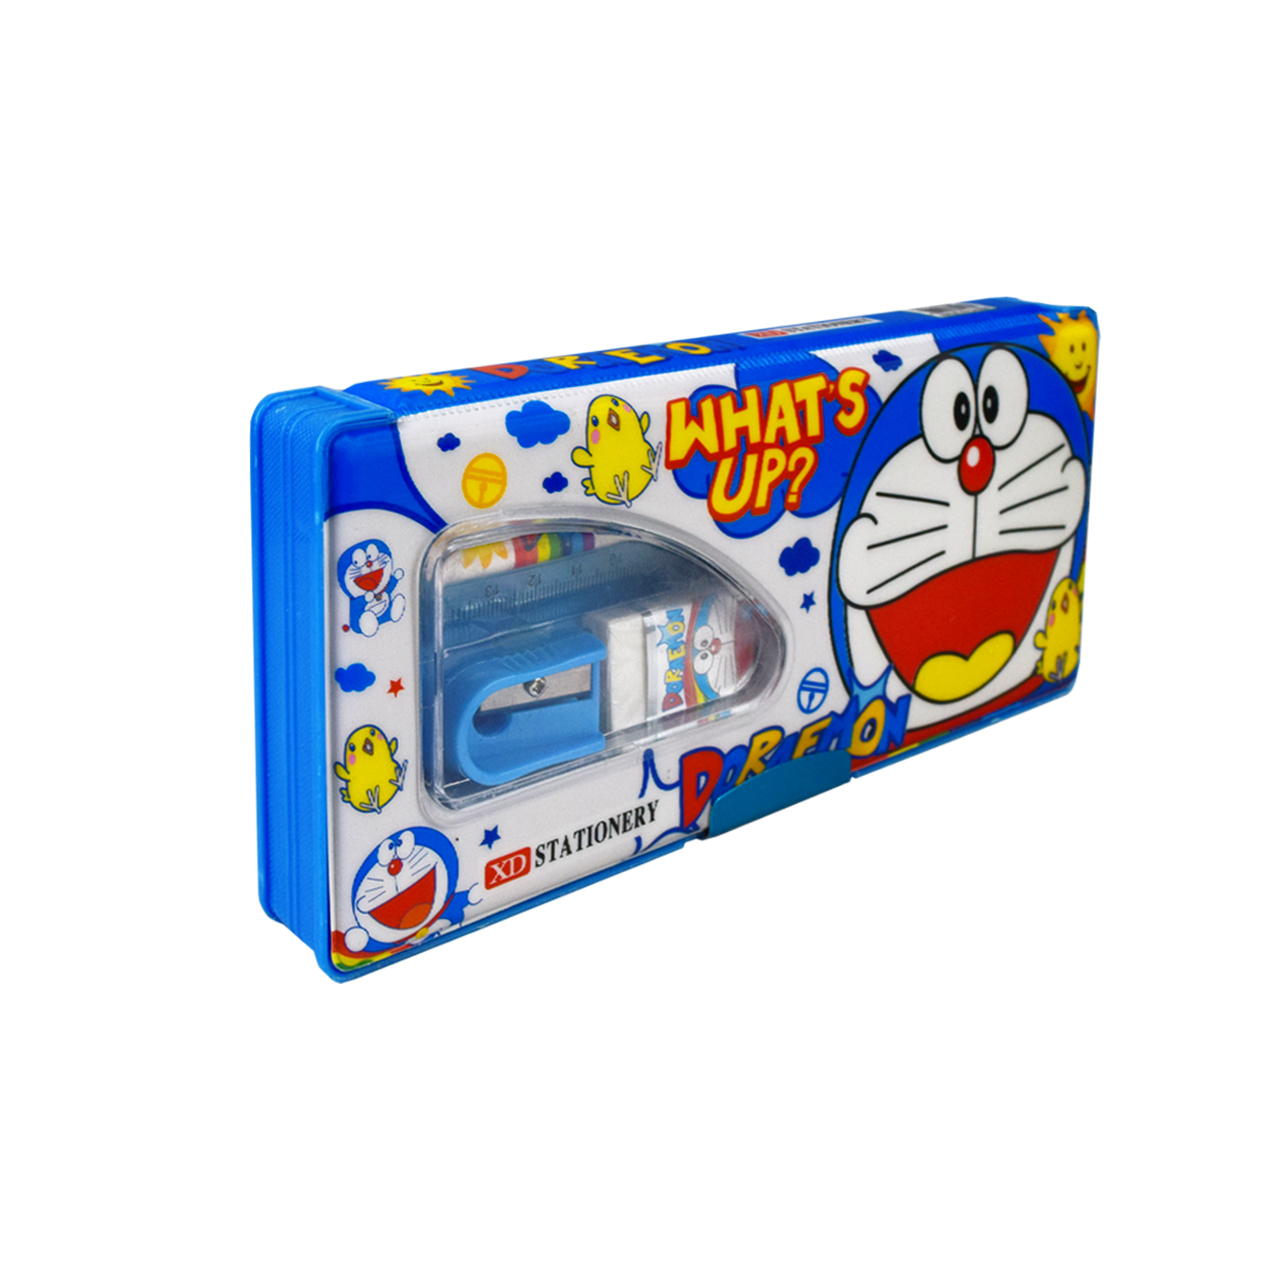 بسته لوازم تحریر ایکس دی استیشنری طرح Doraemon مجموعه 5 عددی 